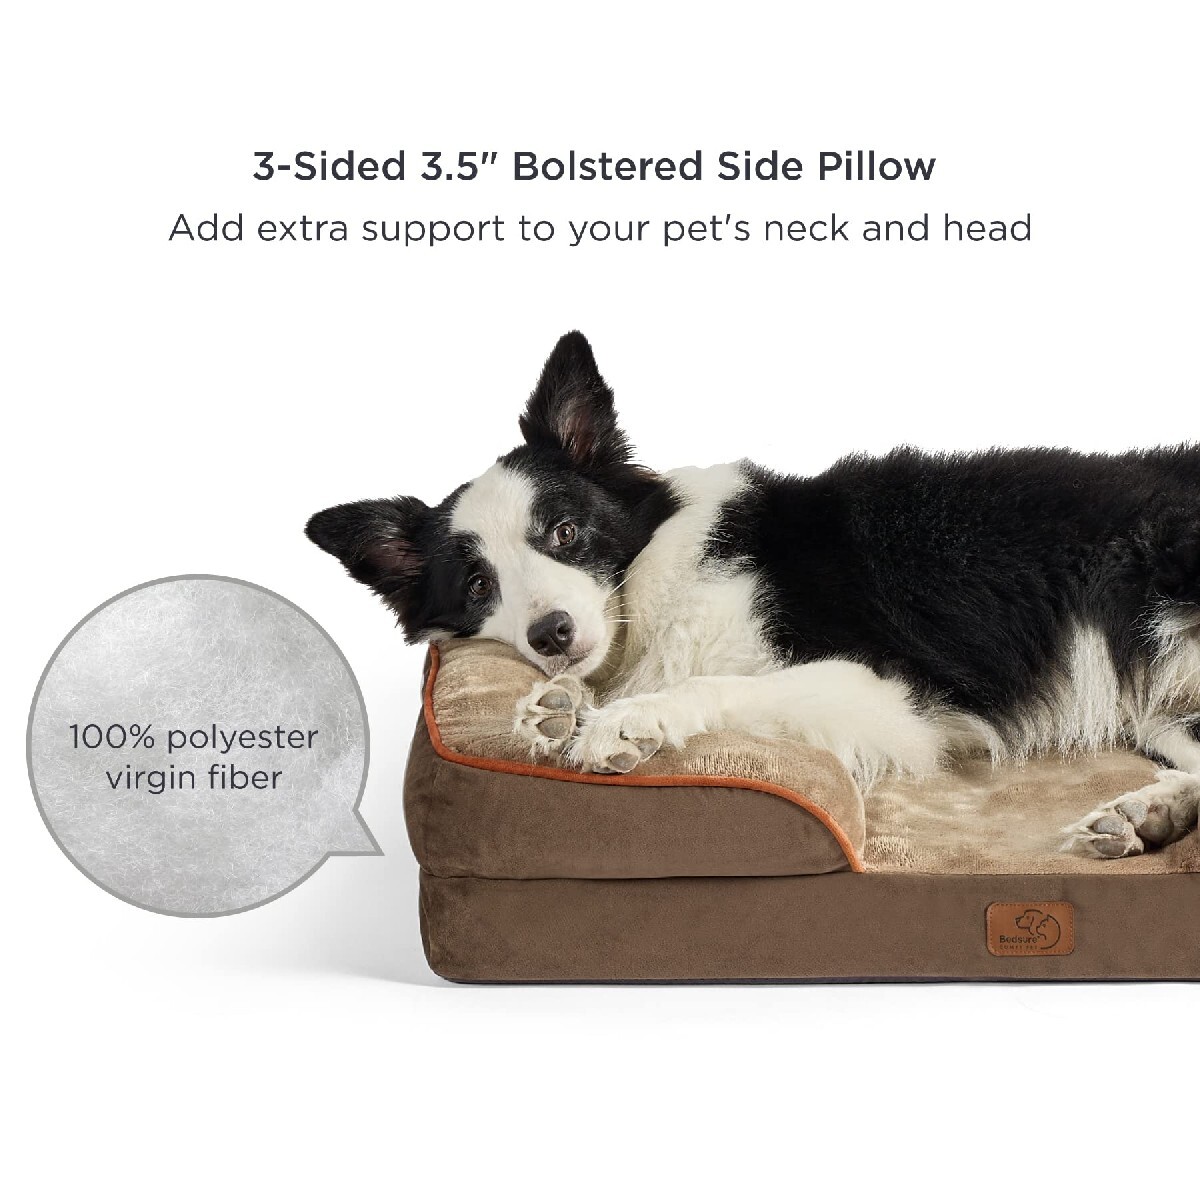 Orthopedic dog bed limited time sale